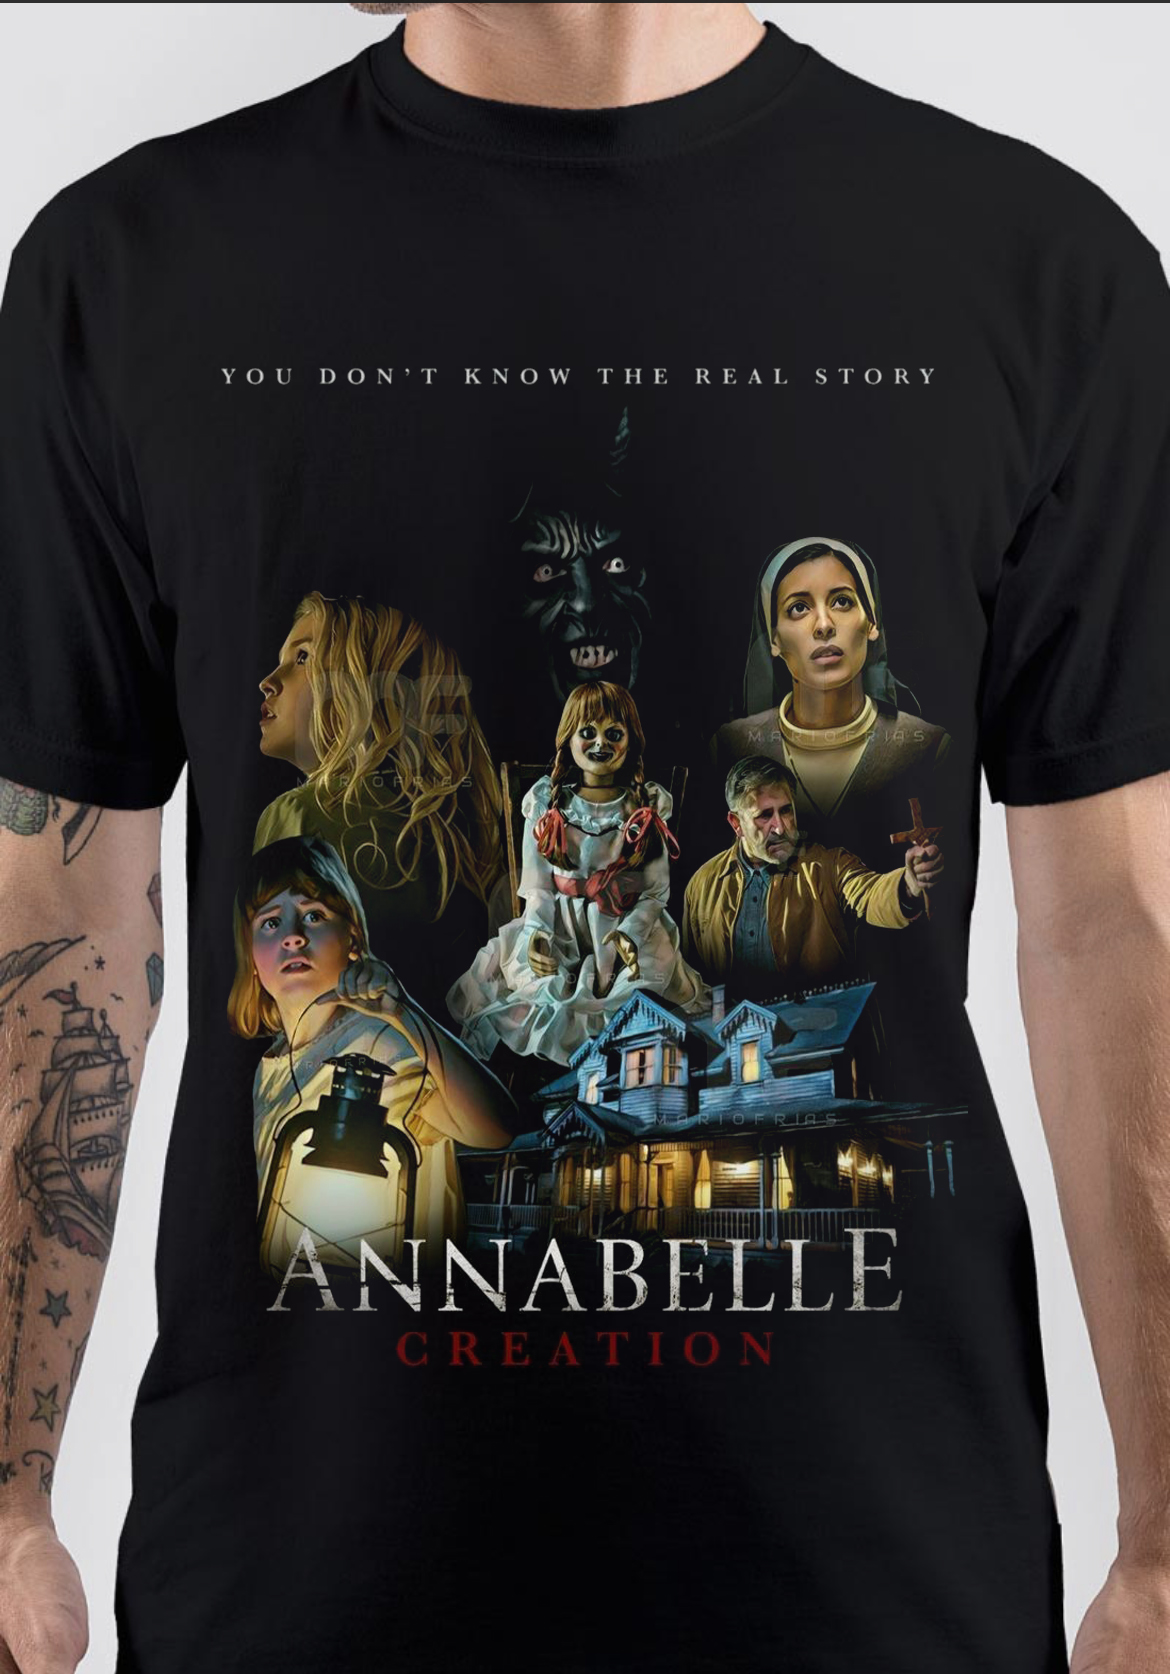 Annabelle T-Shirt And Merchandise